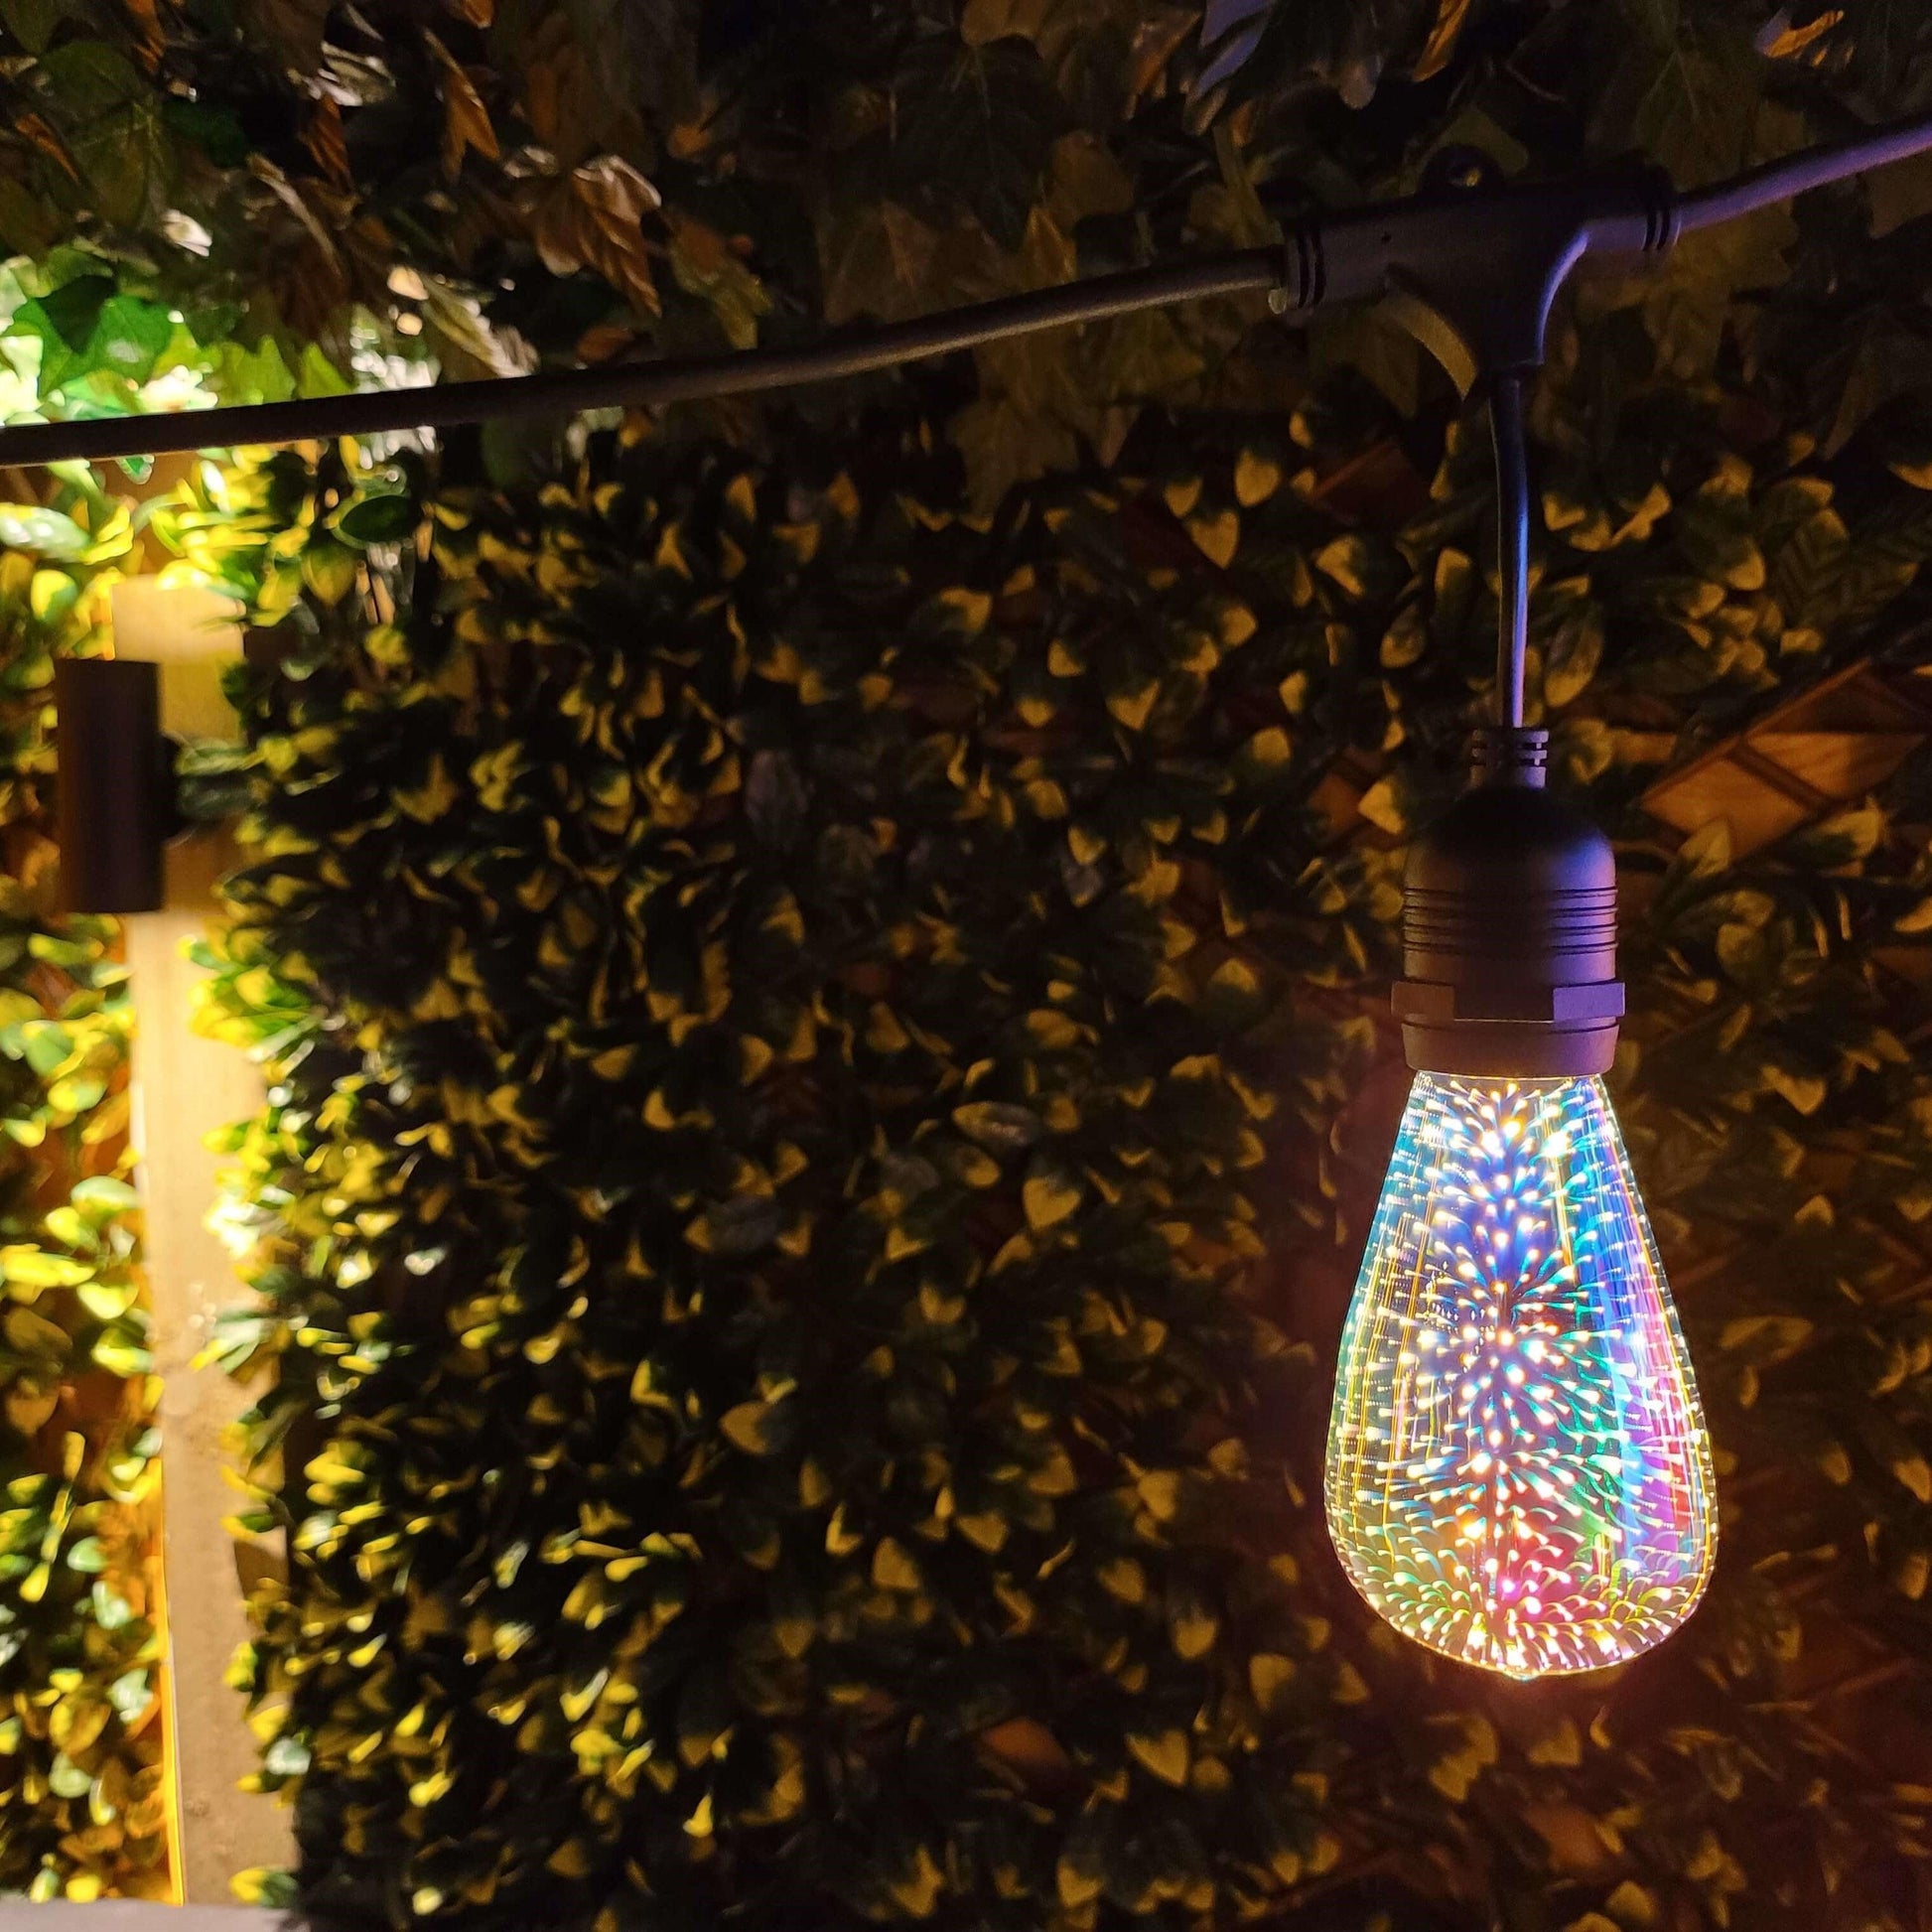 LED 3D Printed "Firework" Bulb Decorative Lamp Light E27 ST64 - Lighting Legends